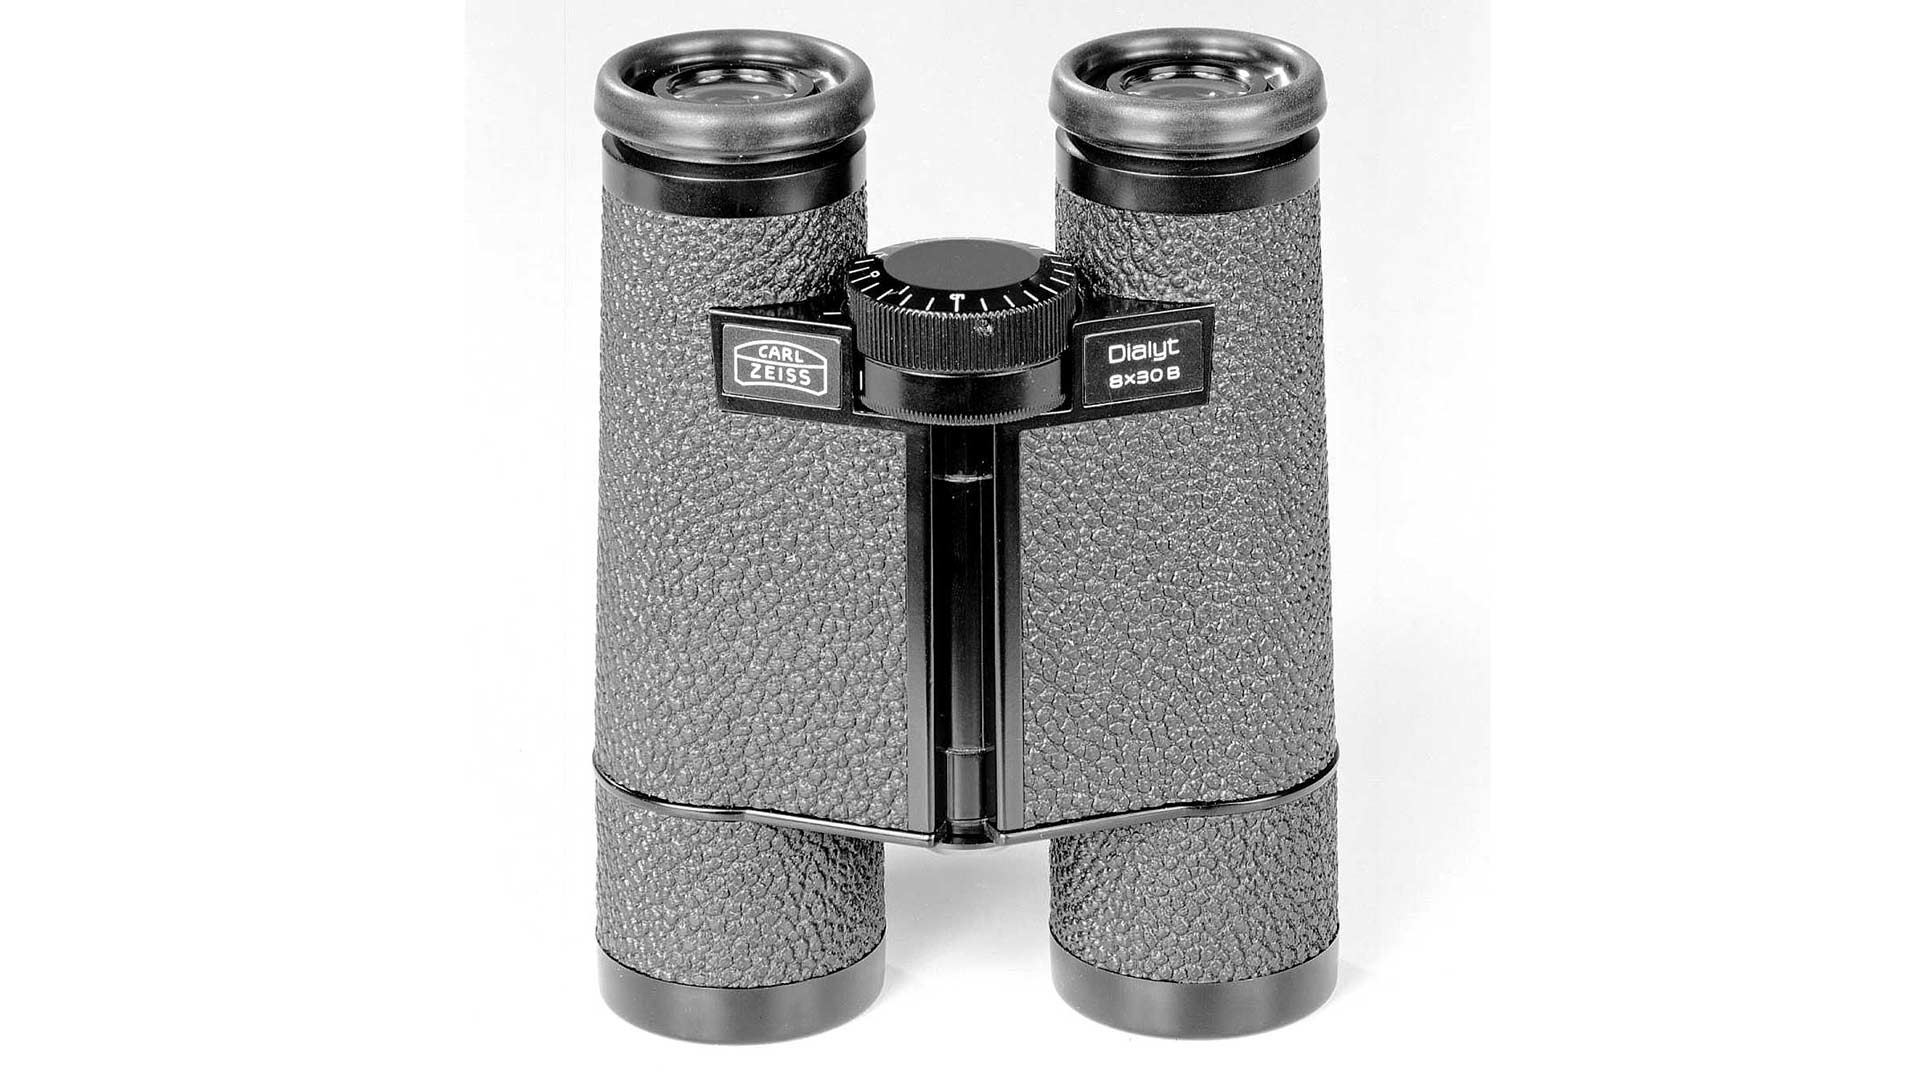 Dialyt binoculars with direct-vision prism-erecting system based on the Schmidt design